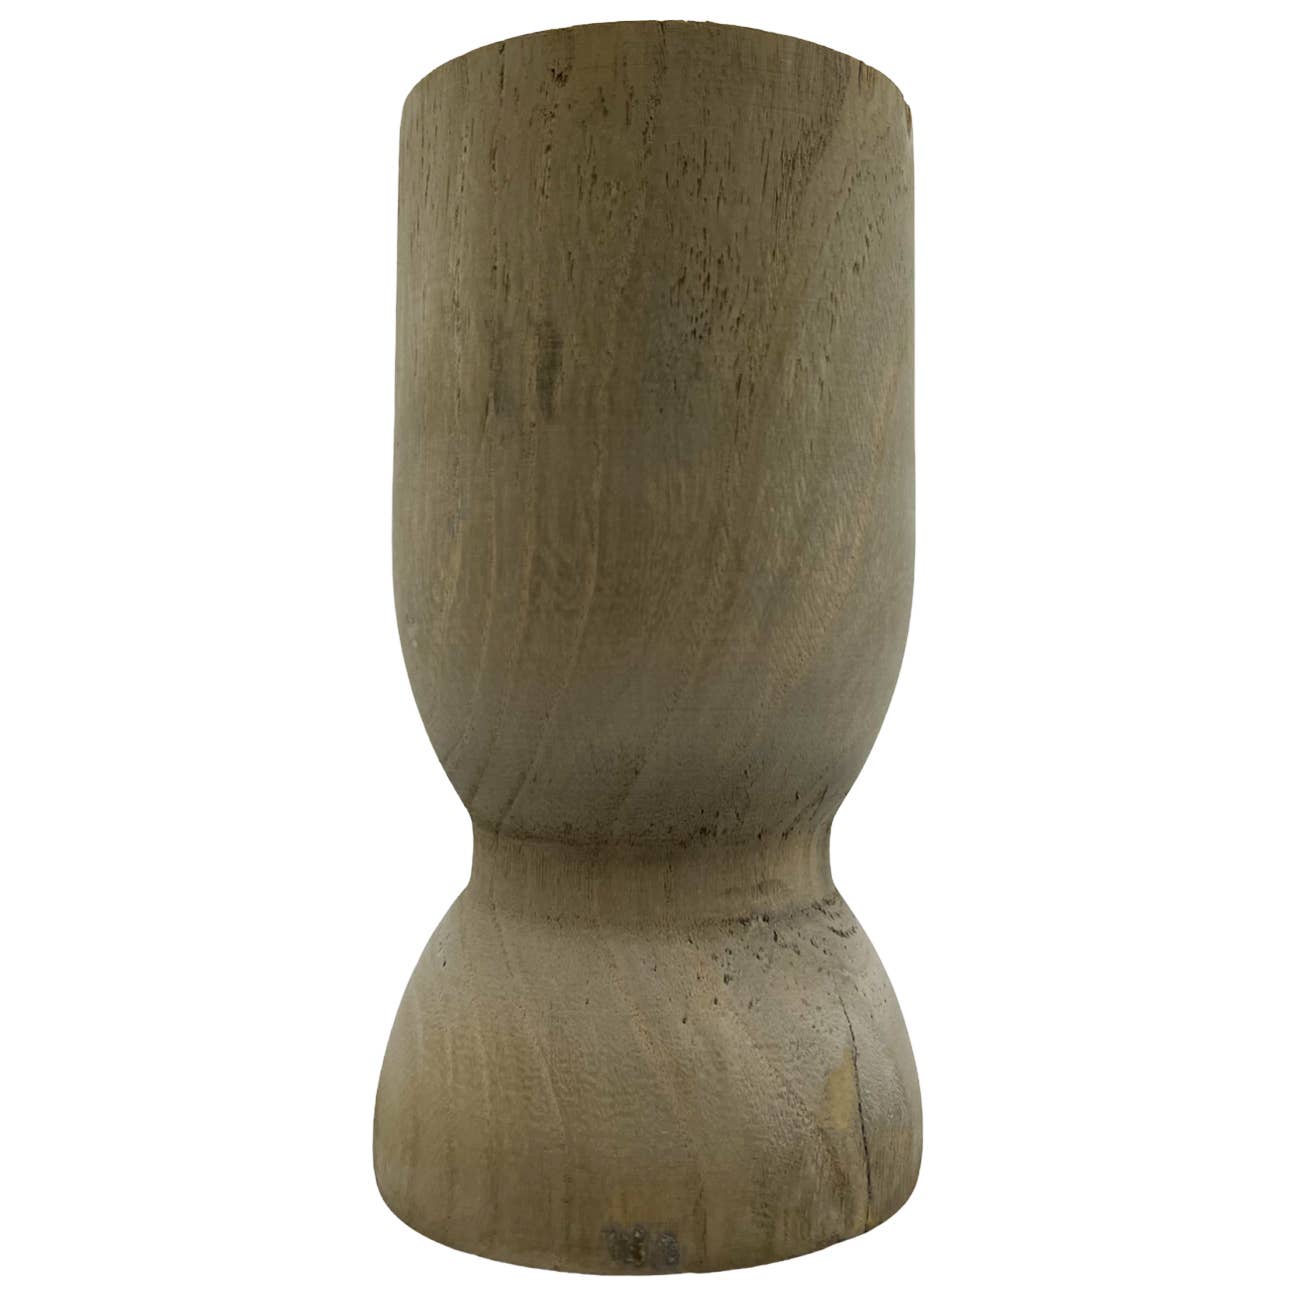 11" High Decorative Wood Vase In Brown